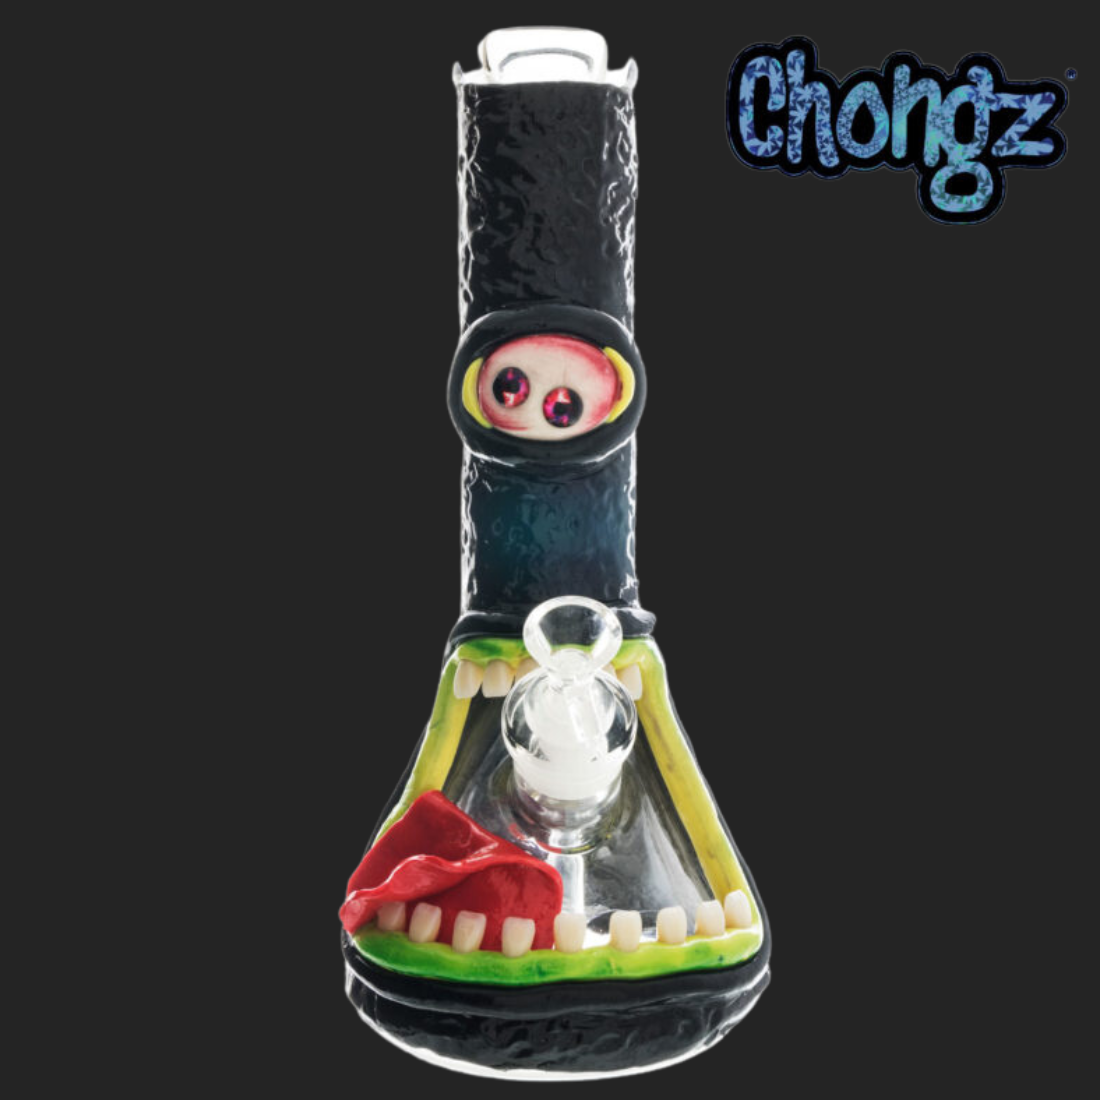 CHONGZ “Colin” Ice bongo